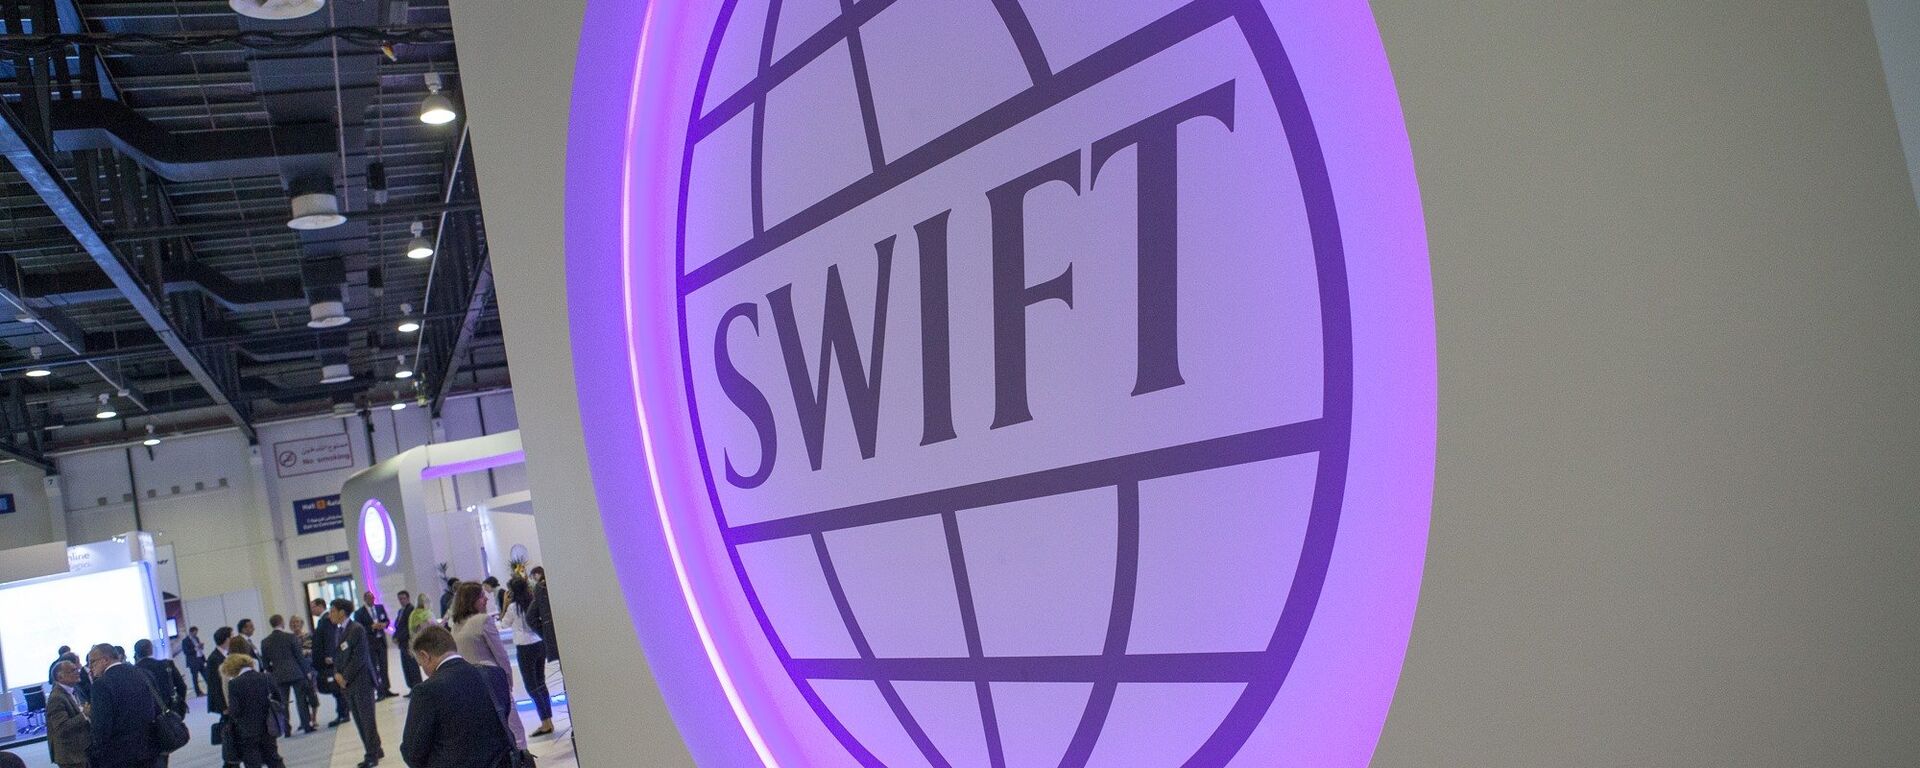 The Society for Worldwide Interbank Financial Telecommunication (SWIFT) - Sputnik International, 1920, 31.12.2020